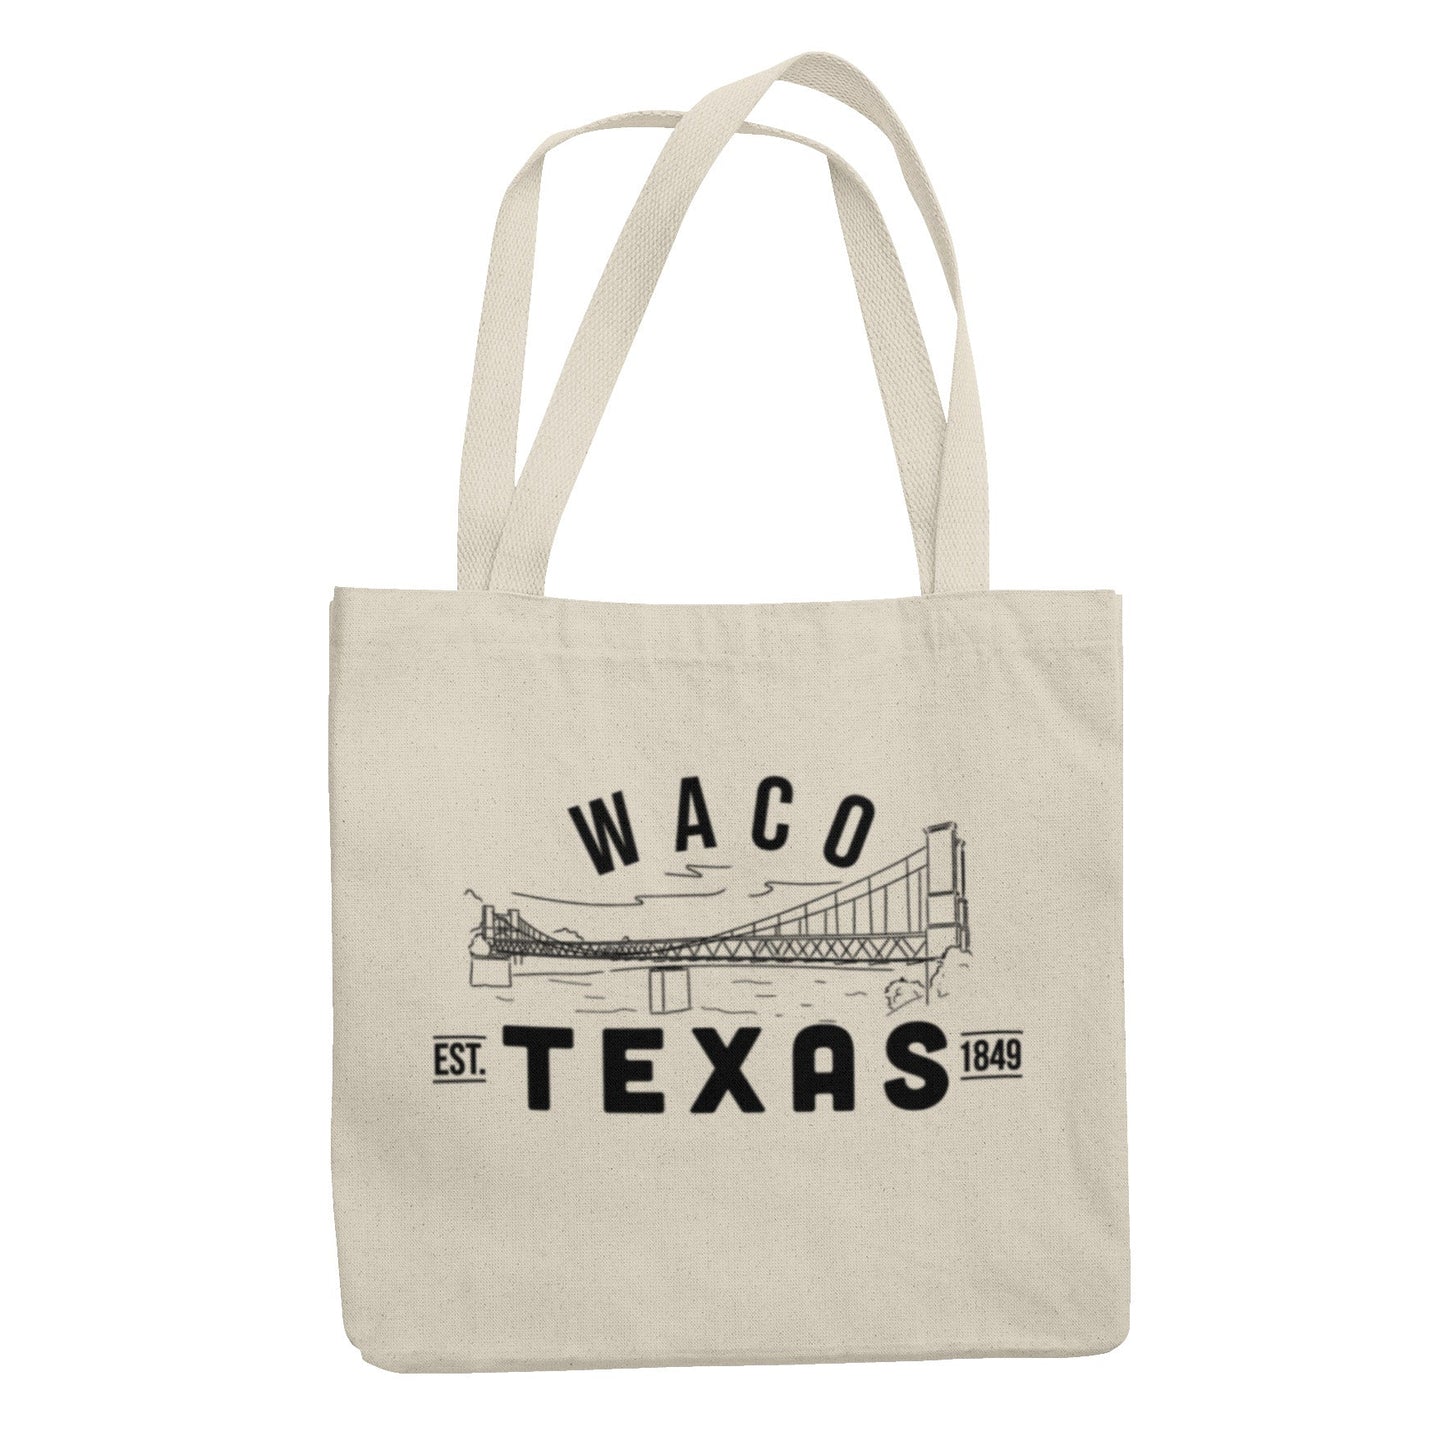 Waco Texas Tote Bag